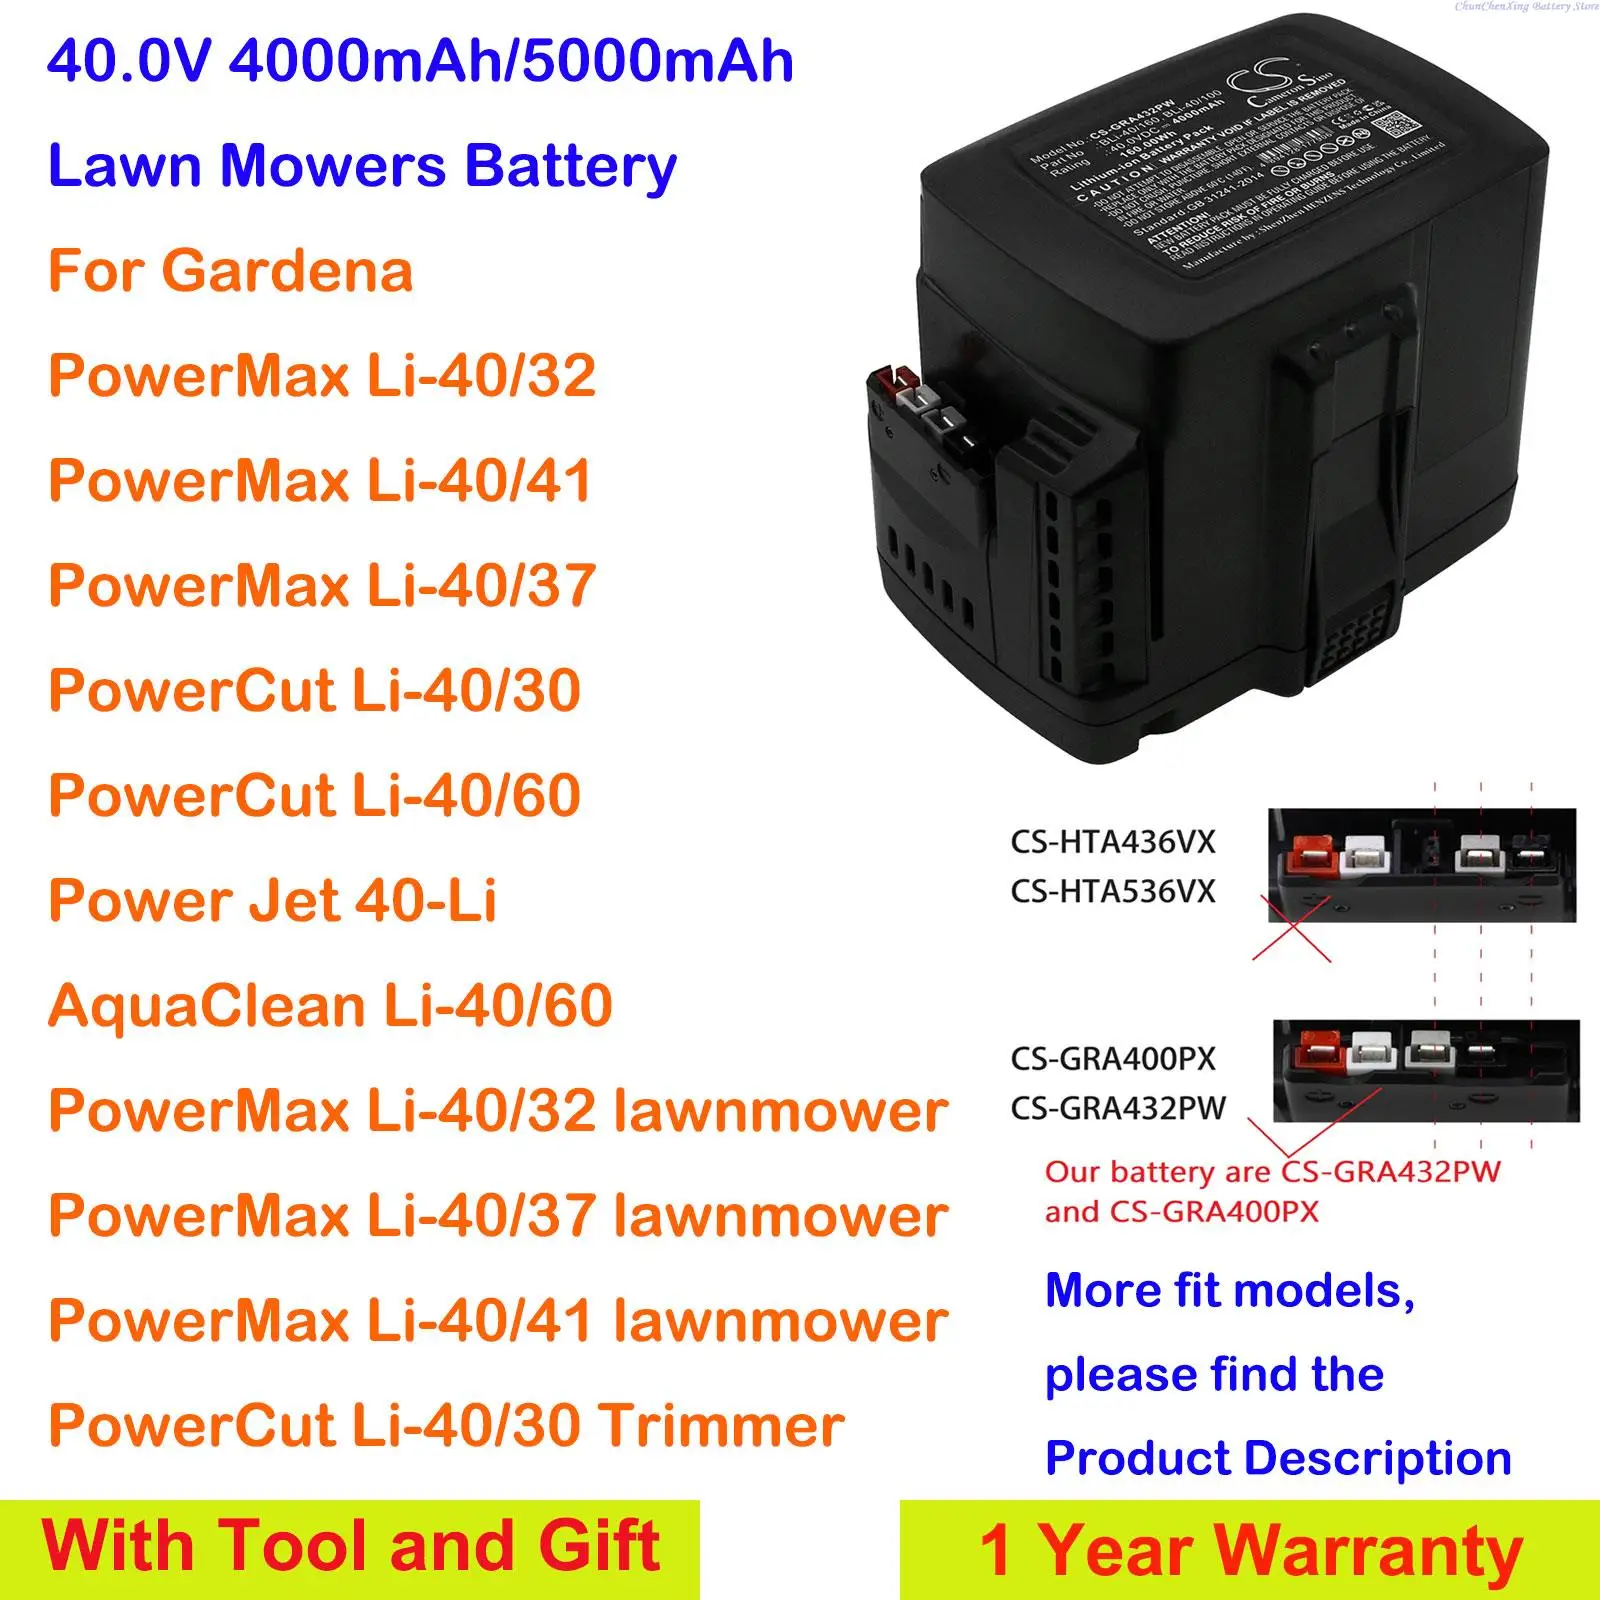 

OrangeYu 4000mAh/5000mAh Lawn Mowers Battery for Gardena PowerMax Li-40/32 (/41, /37, /30, /60), 115iL with tool and Gifts